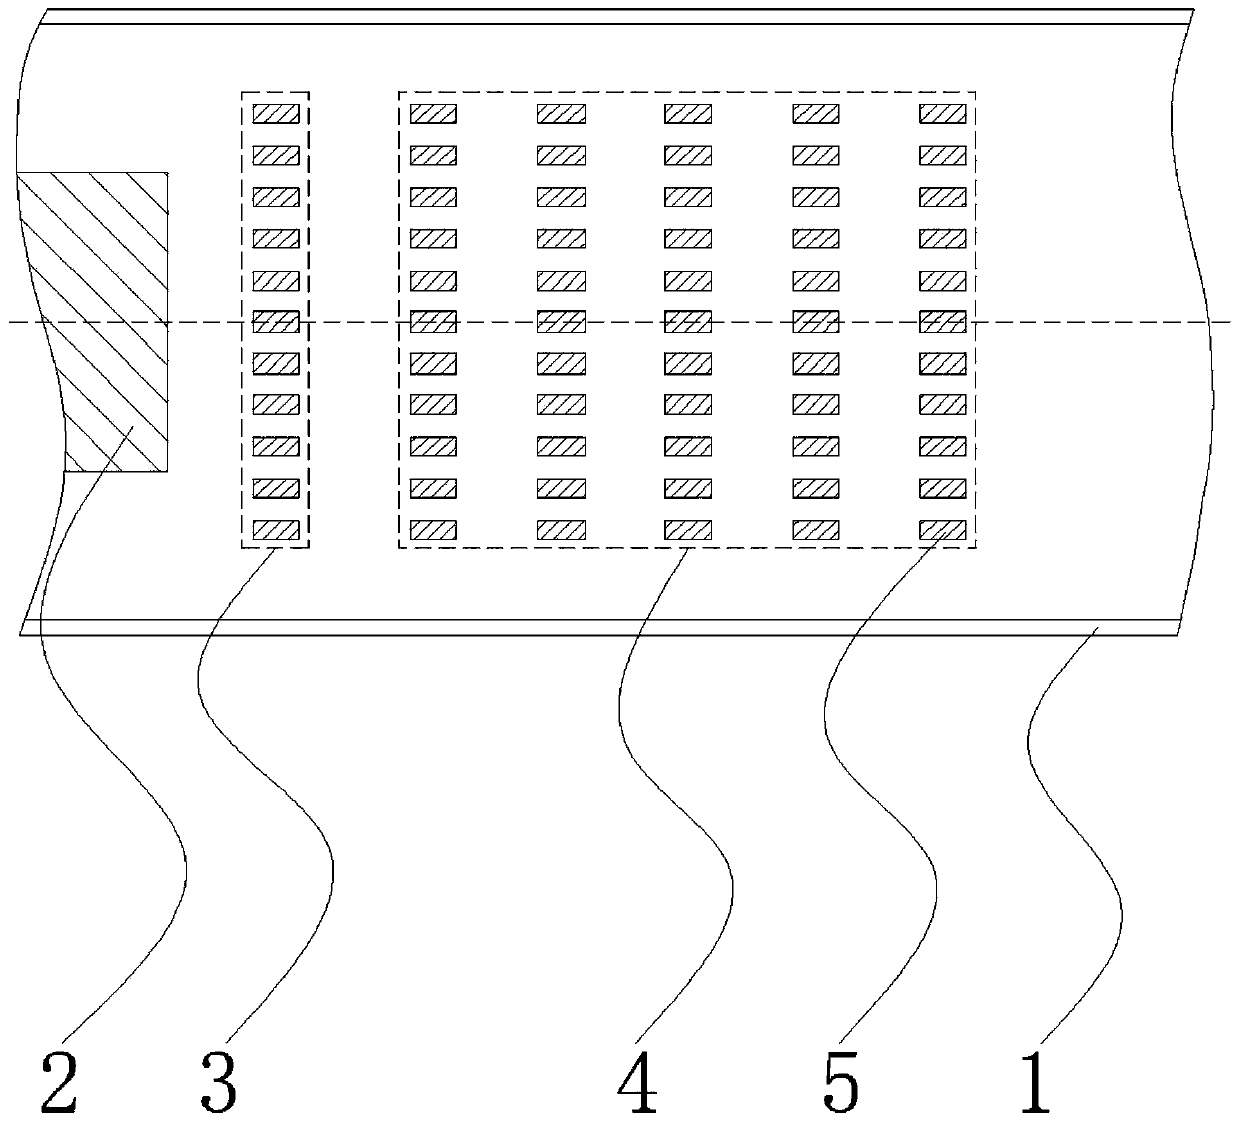 Waveguide-filled metal grid array type C-band virtual cathode oscillator